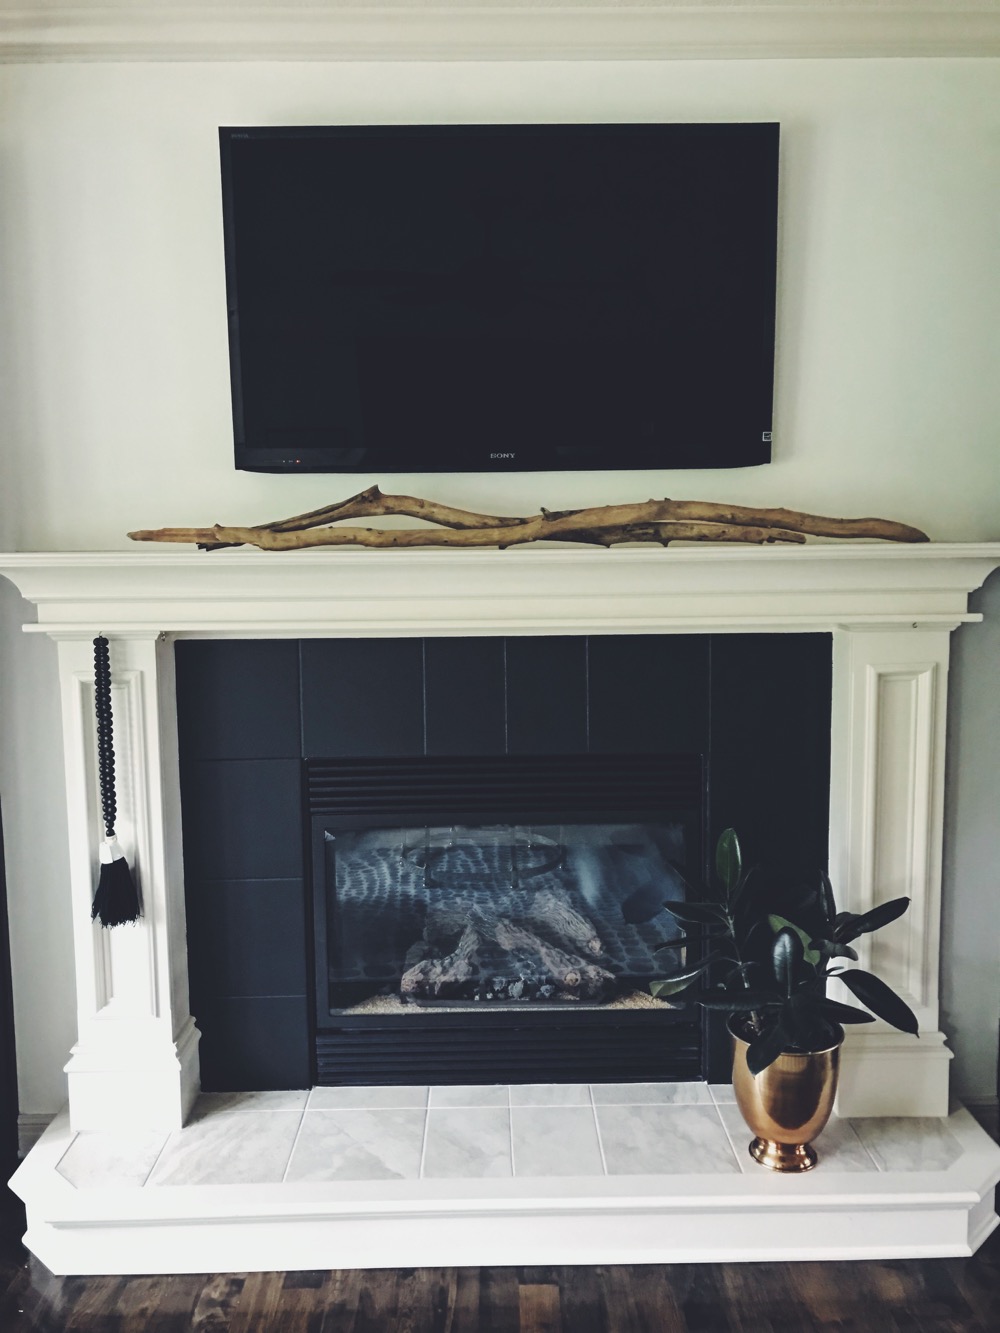 Painted Tile Around Fireplace Life, Painting Fireplace Surround Black